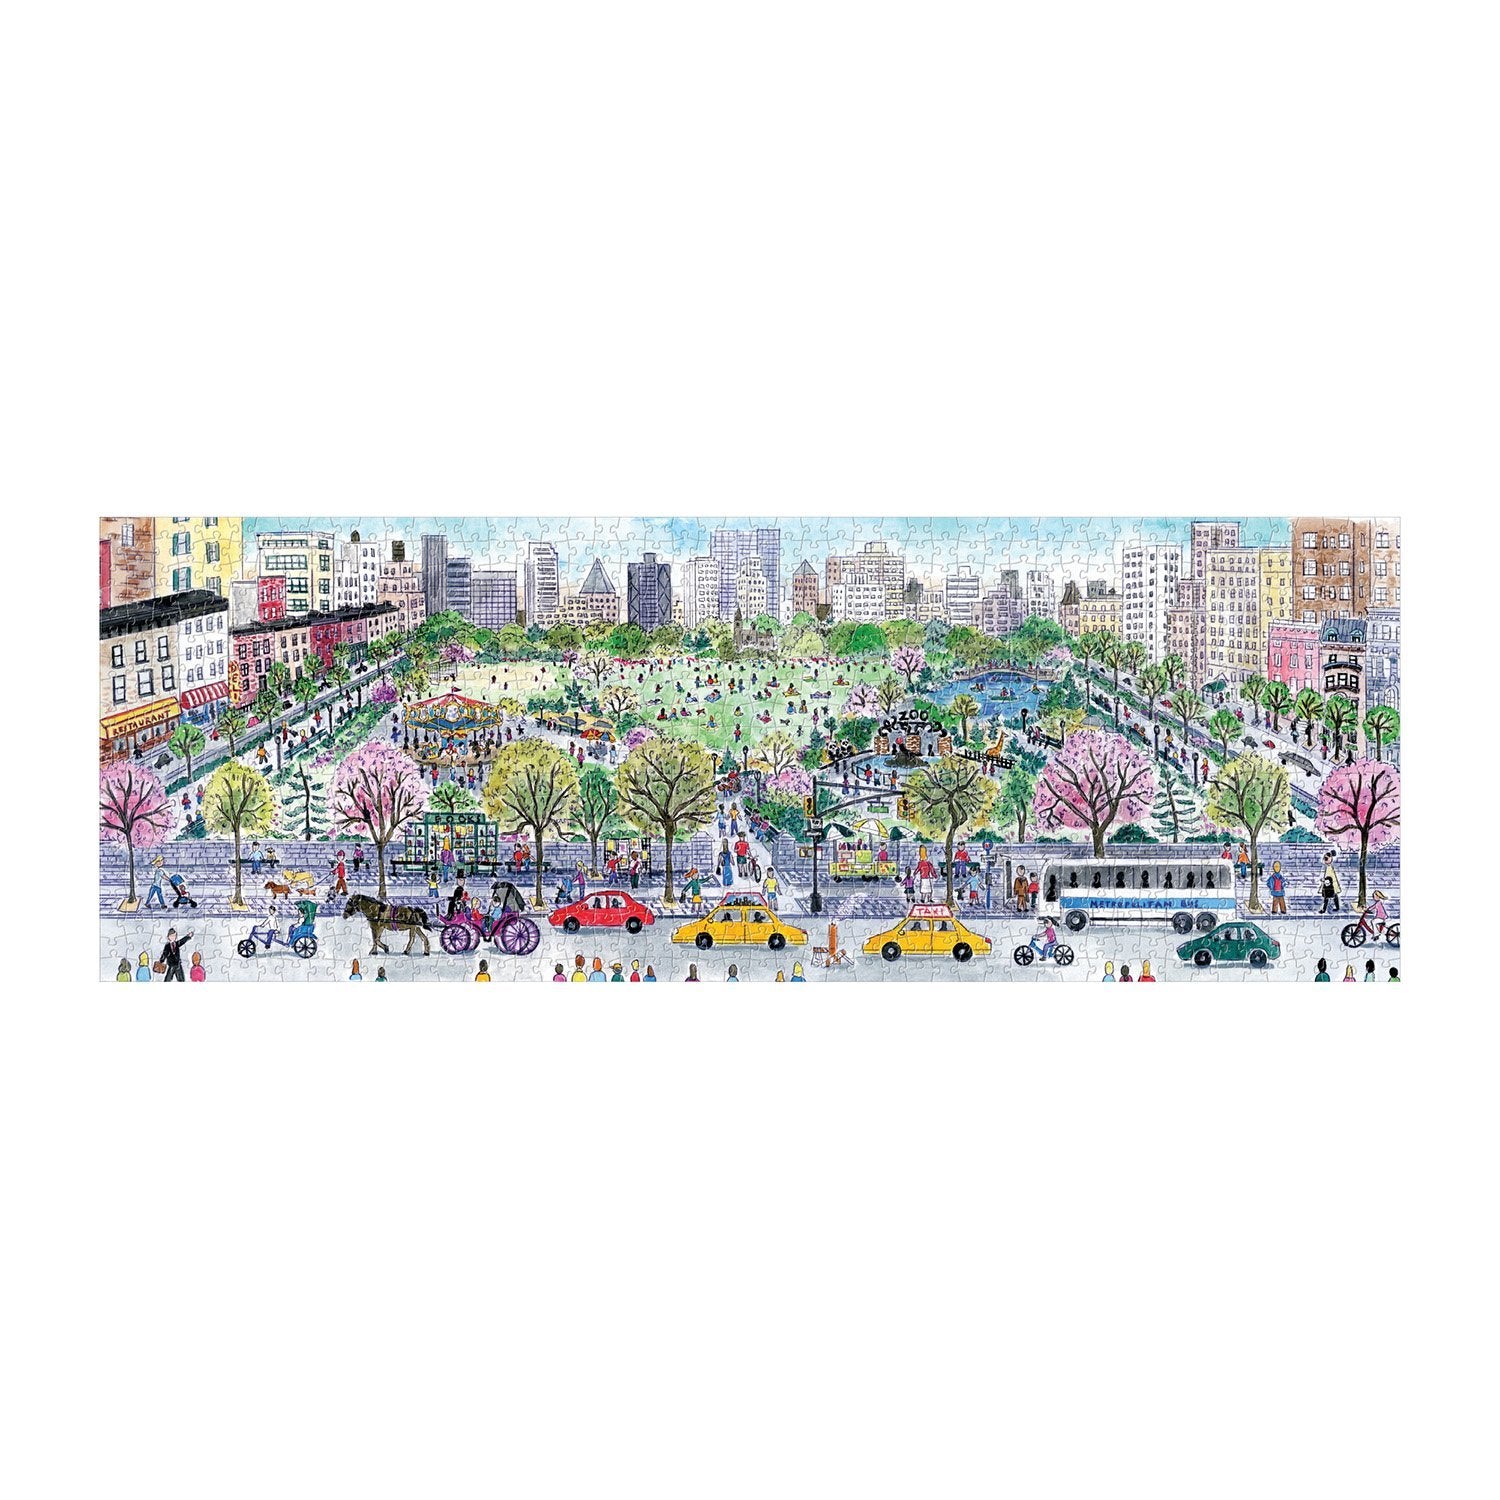 Cityscape Panoramic Puzzle